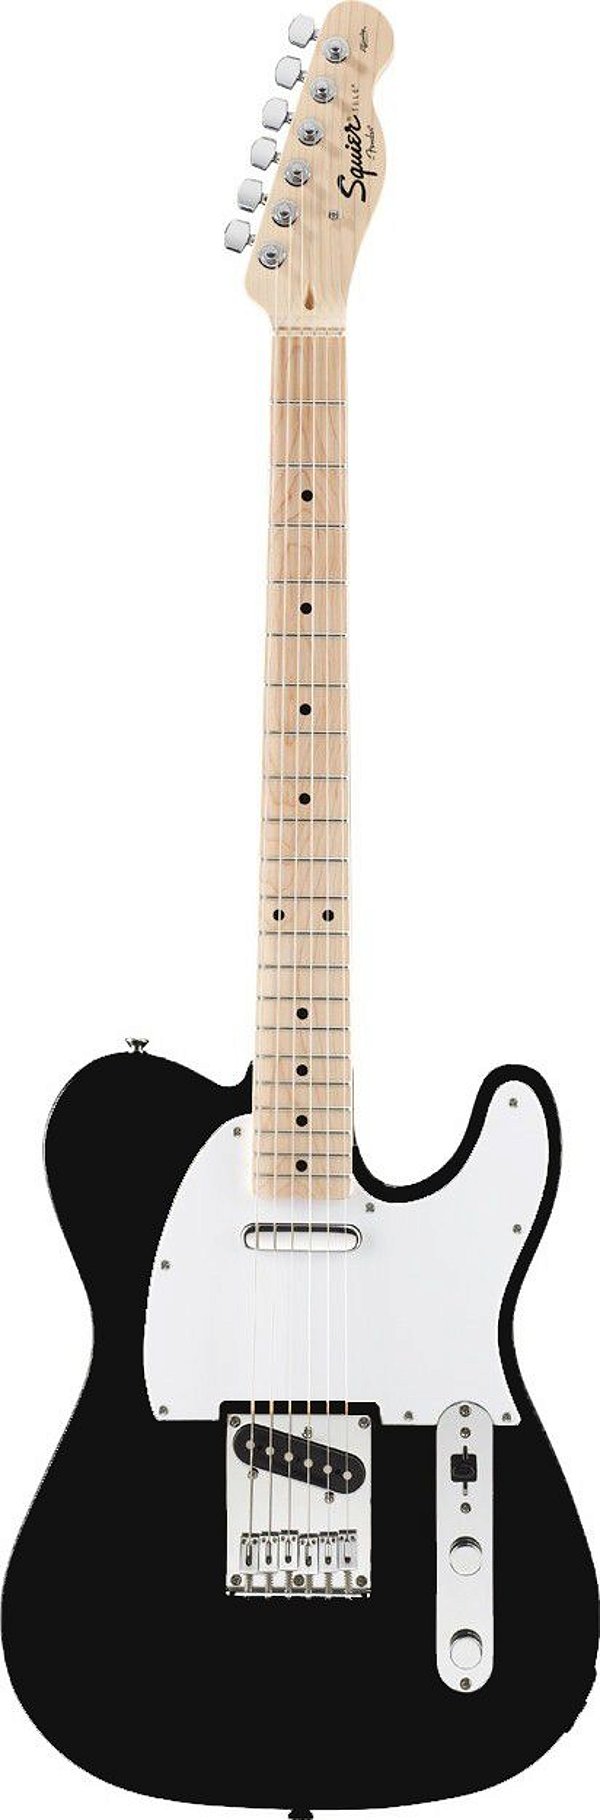 Guitarra Fender Squier Affinity Telecaster Preta